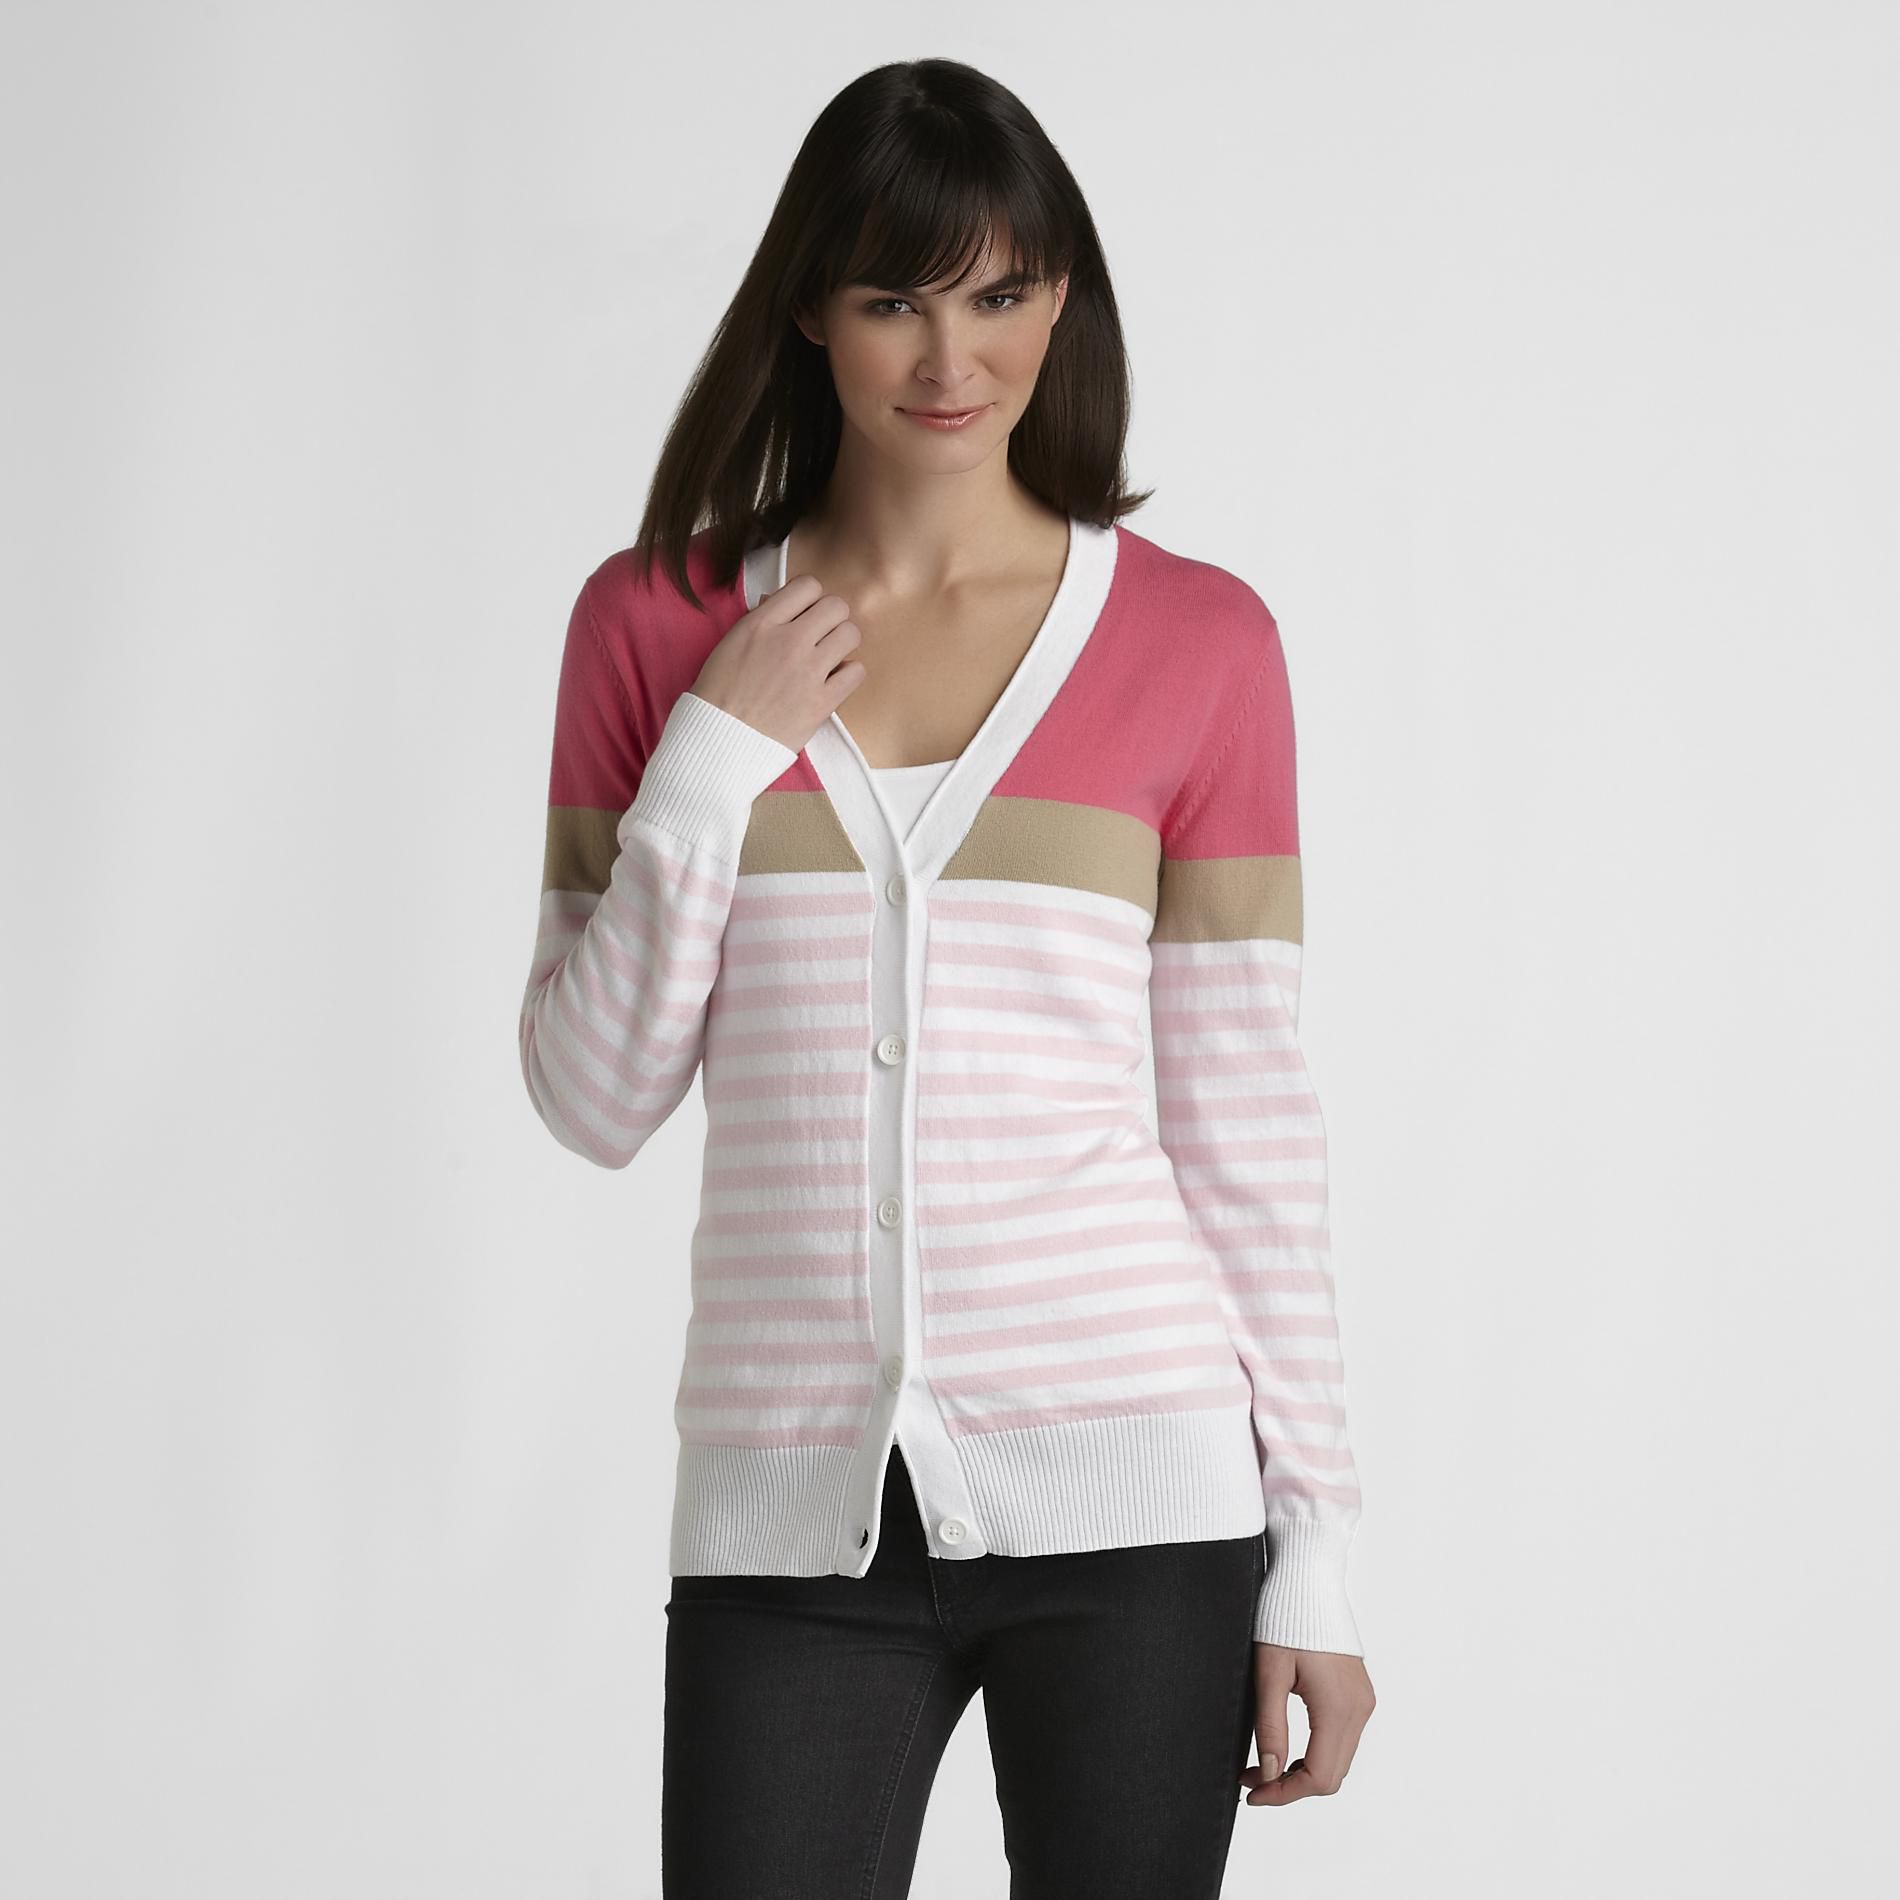 Basic Editions Women's Knit Cardigan - Stripe